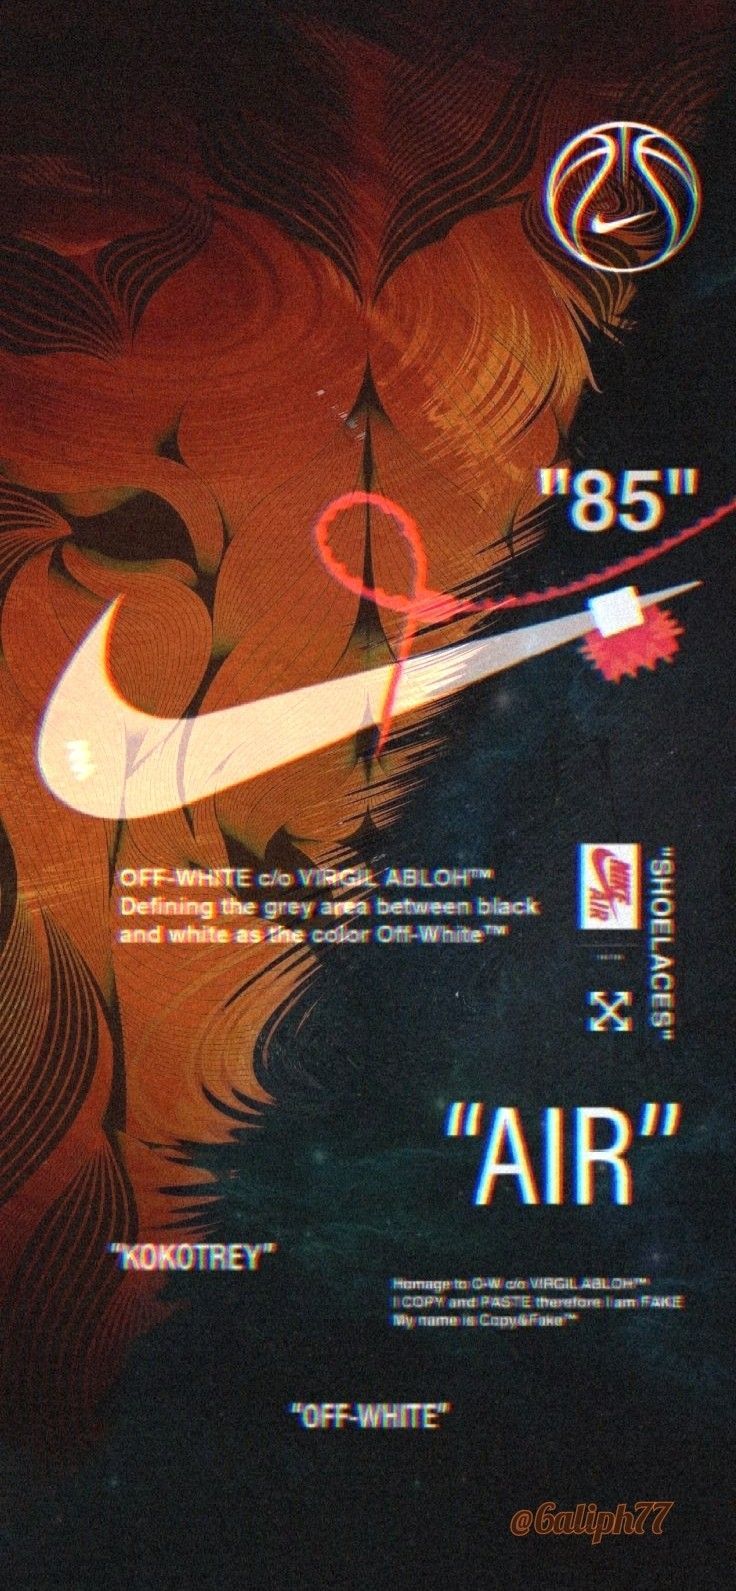 Nike wallpaper, Off white wallpaper, Iphone wallpaper nike - Off-White